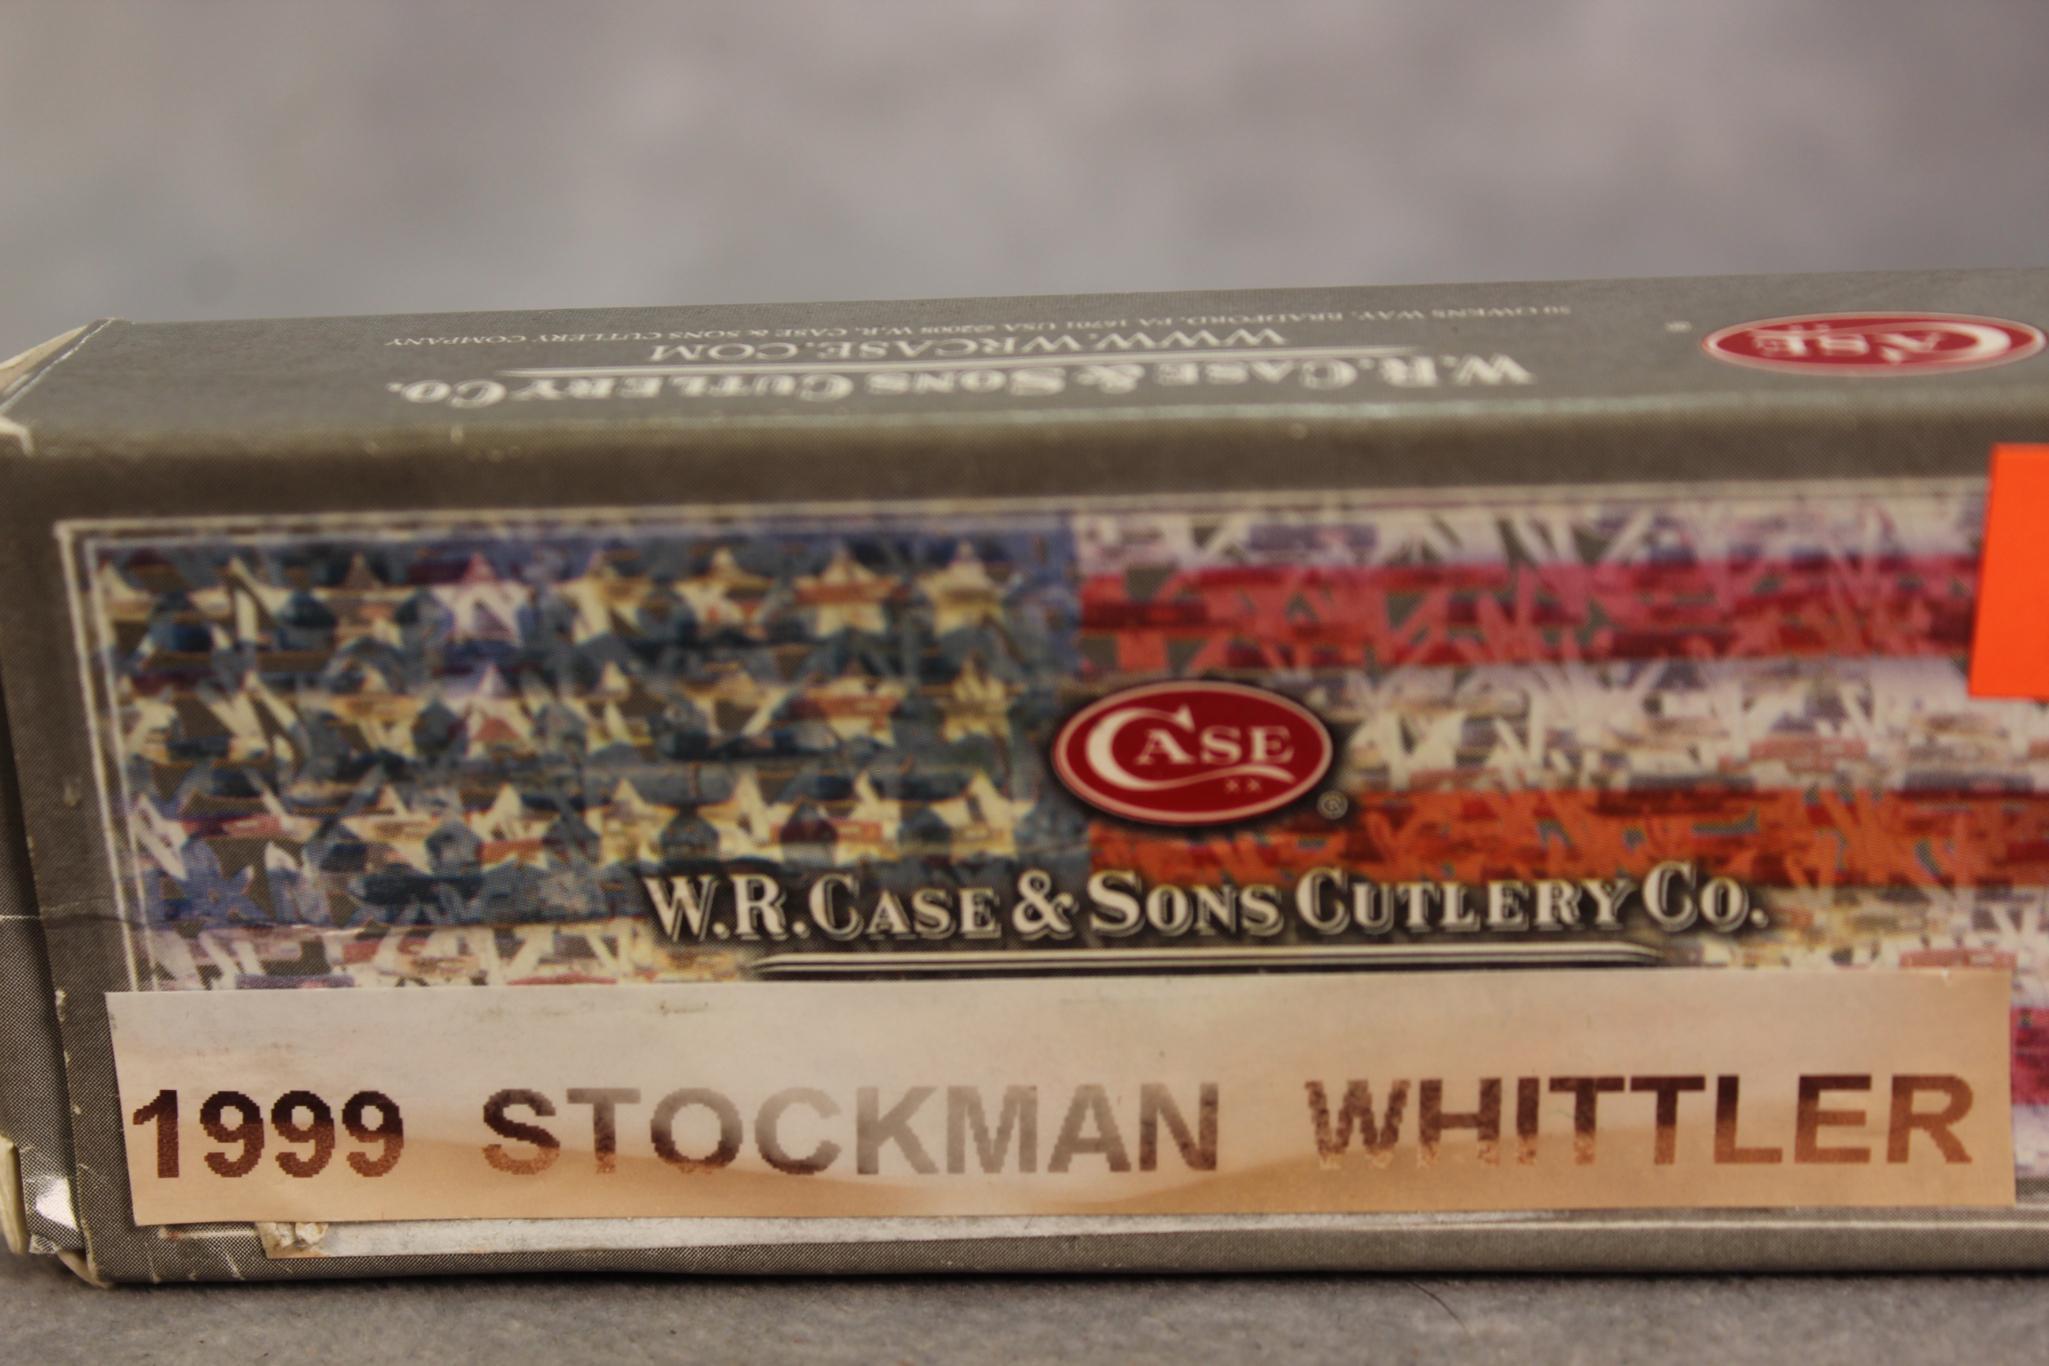 1999 CASE STOCKMAN WHITTLER STAG V5383 WH SS